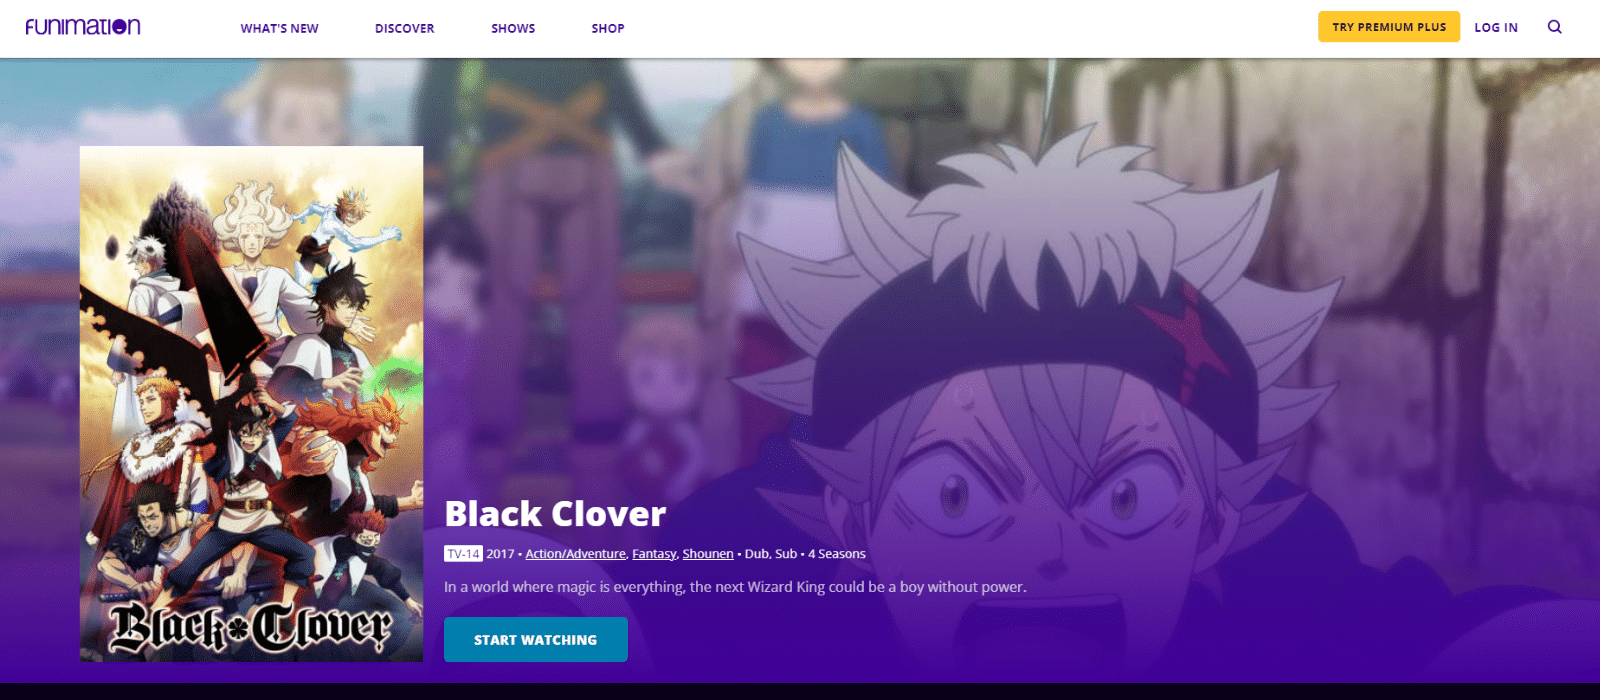 Black Clover Funimation